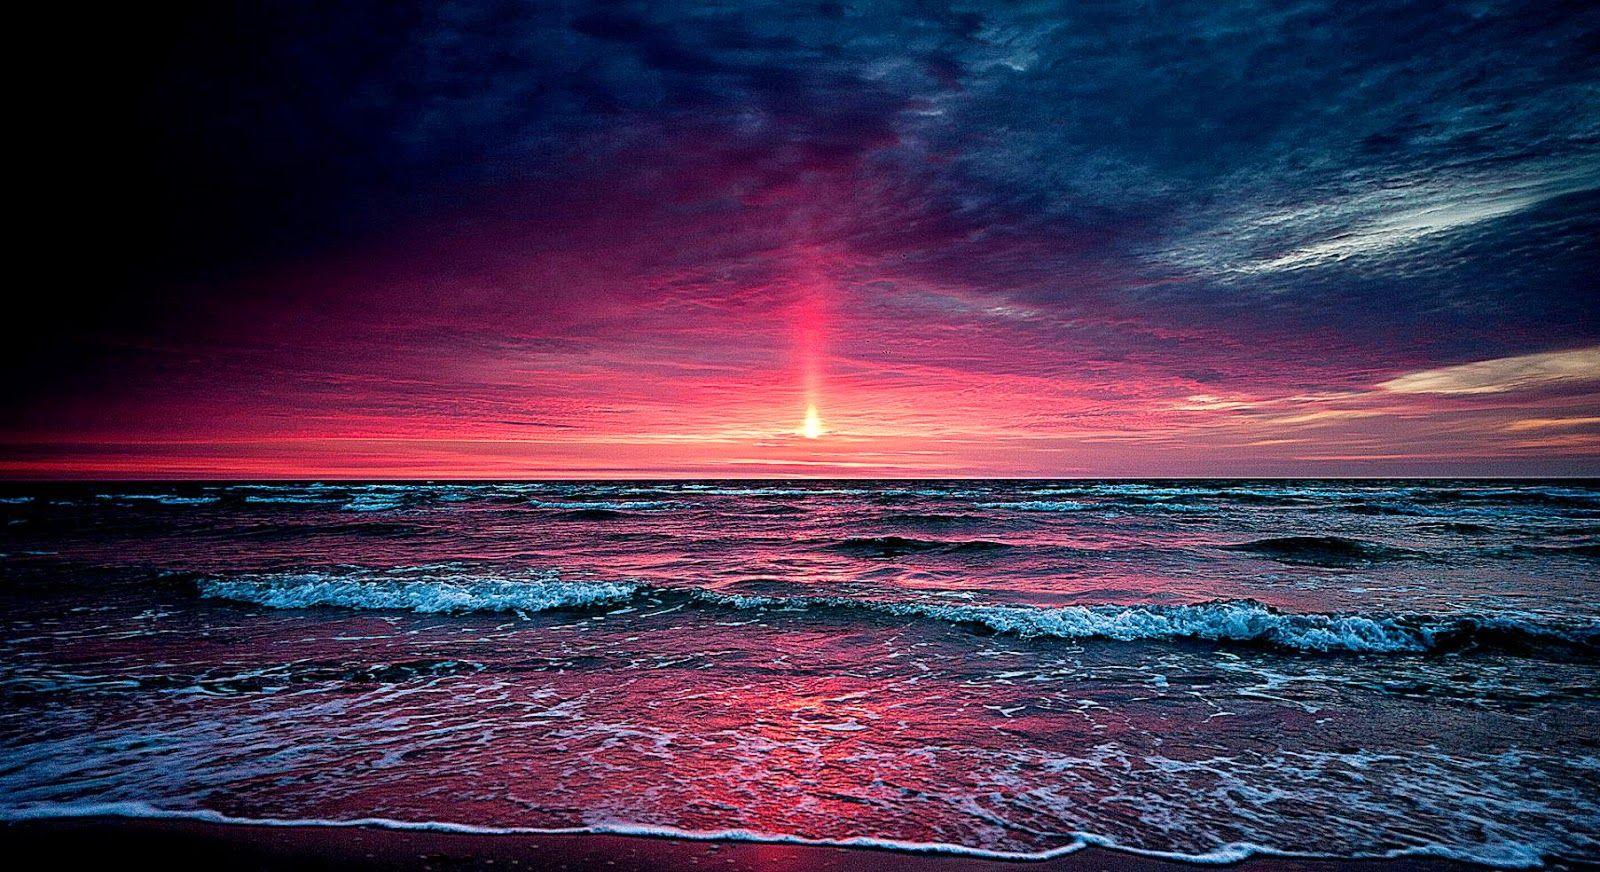 Purple Beach Sunset Wallpapers Top Free Purple Beach Sunset Backgrounds Wallpaperaccess